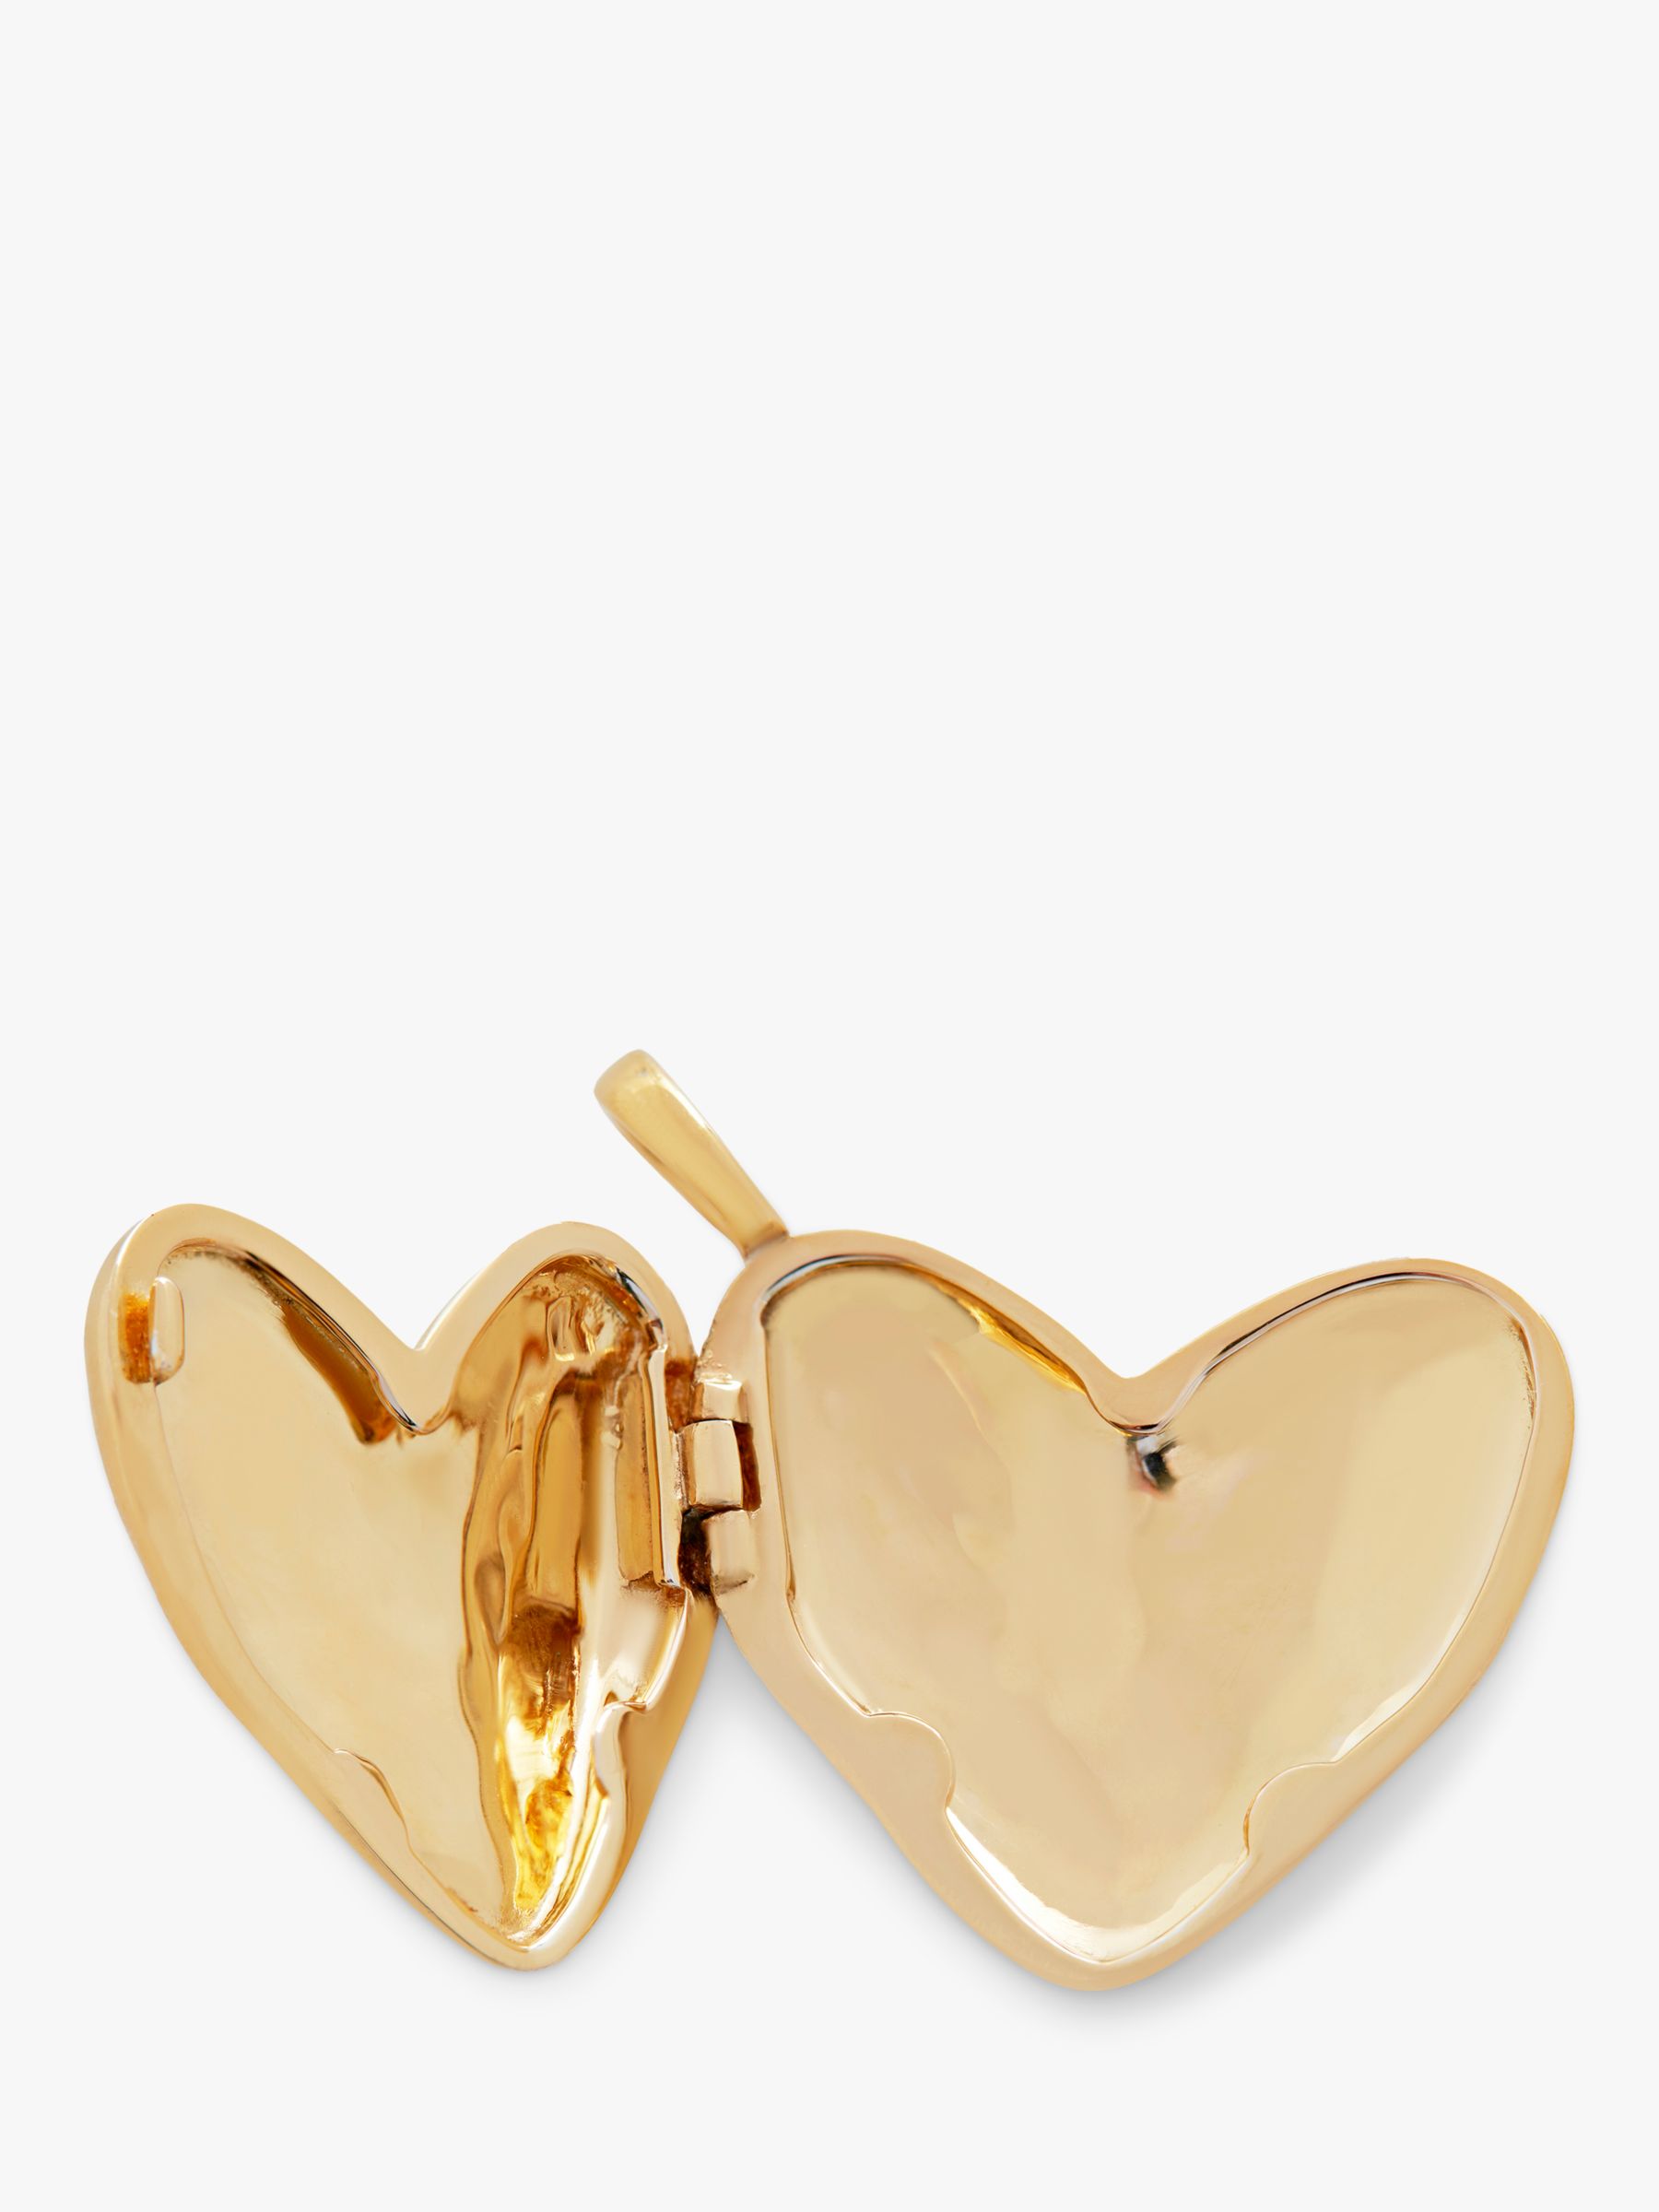 Monica Vinader Heart Locket Chain Necklace, Gold